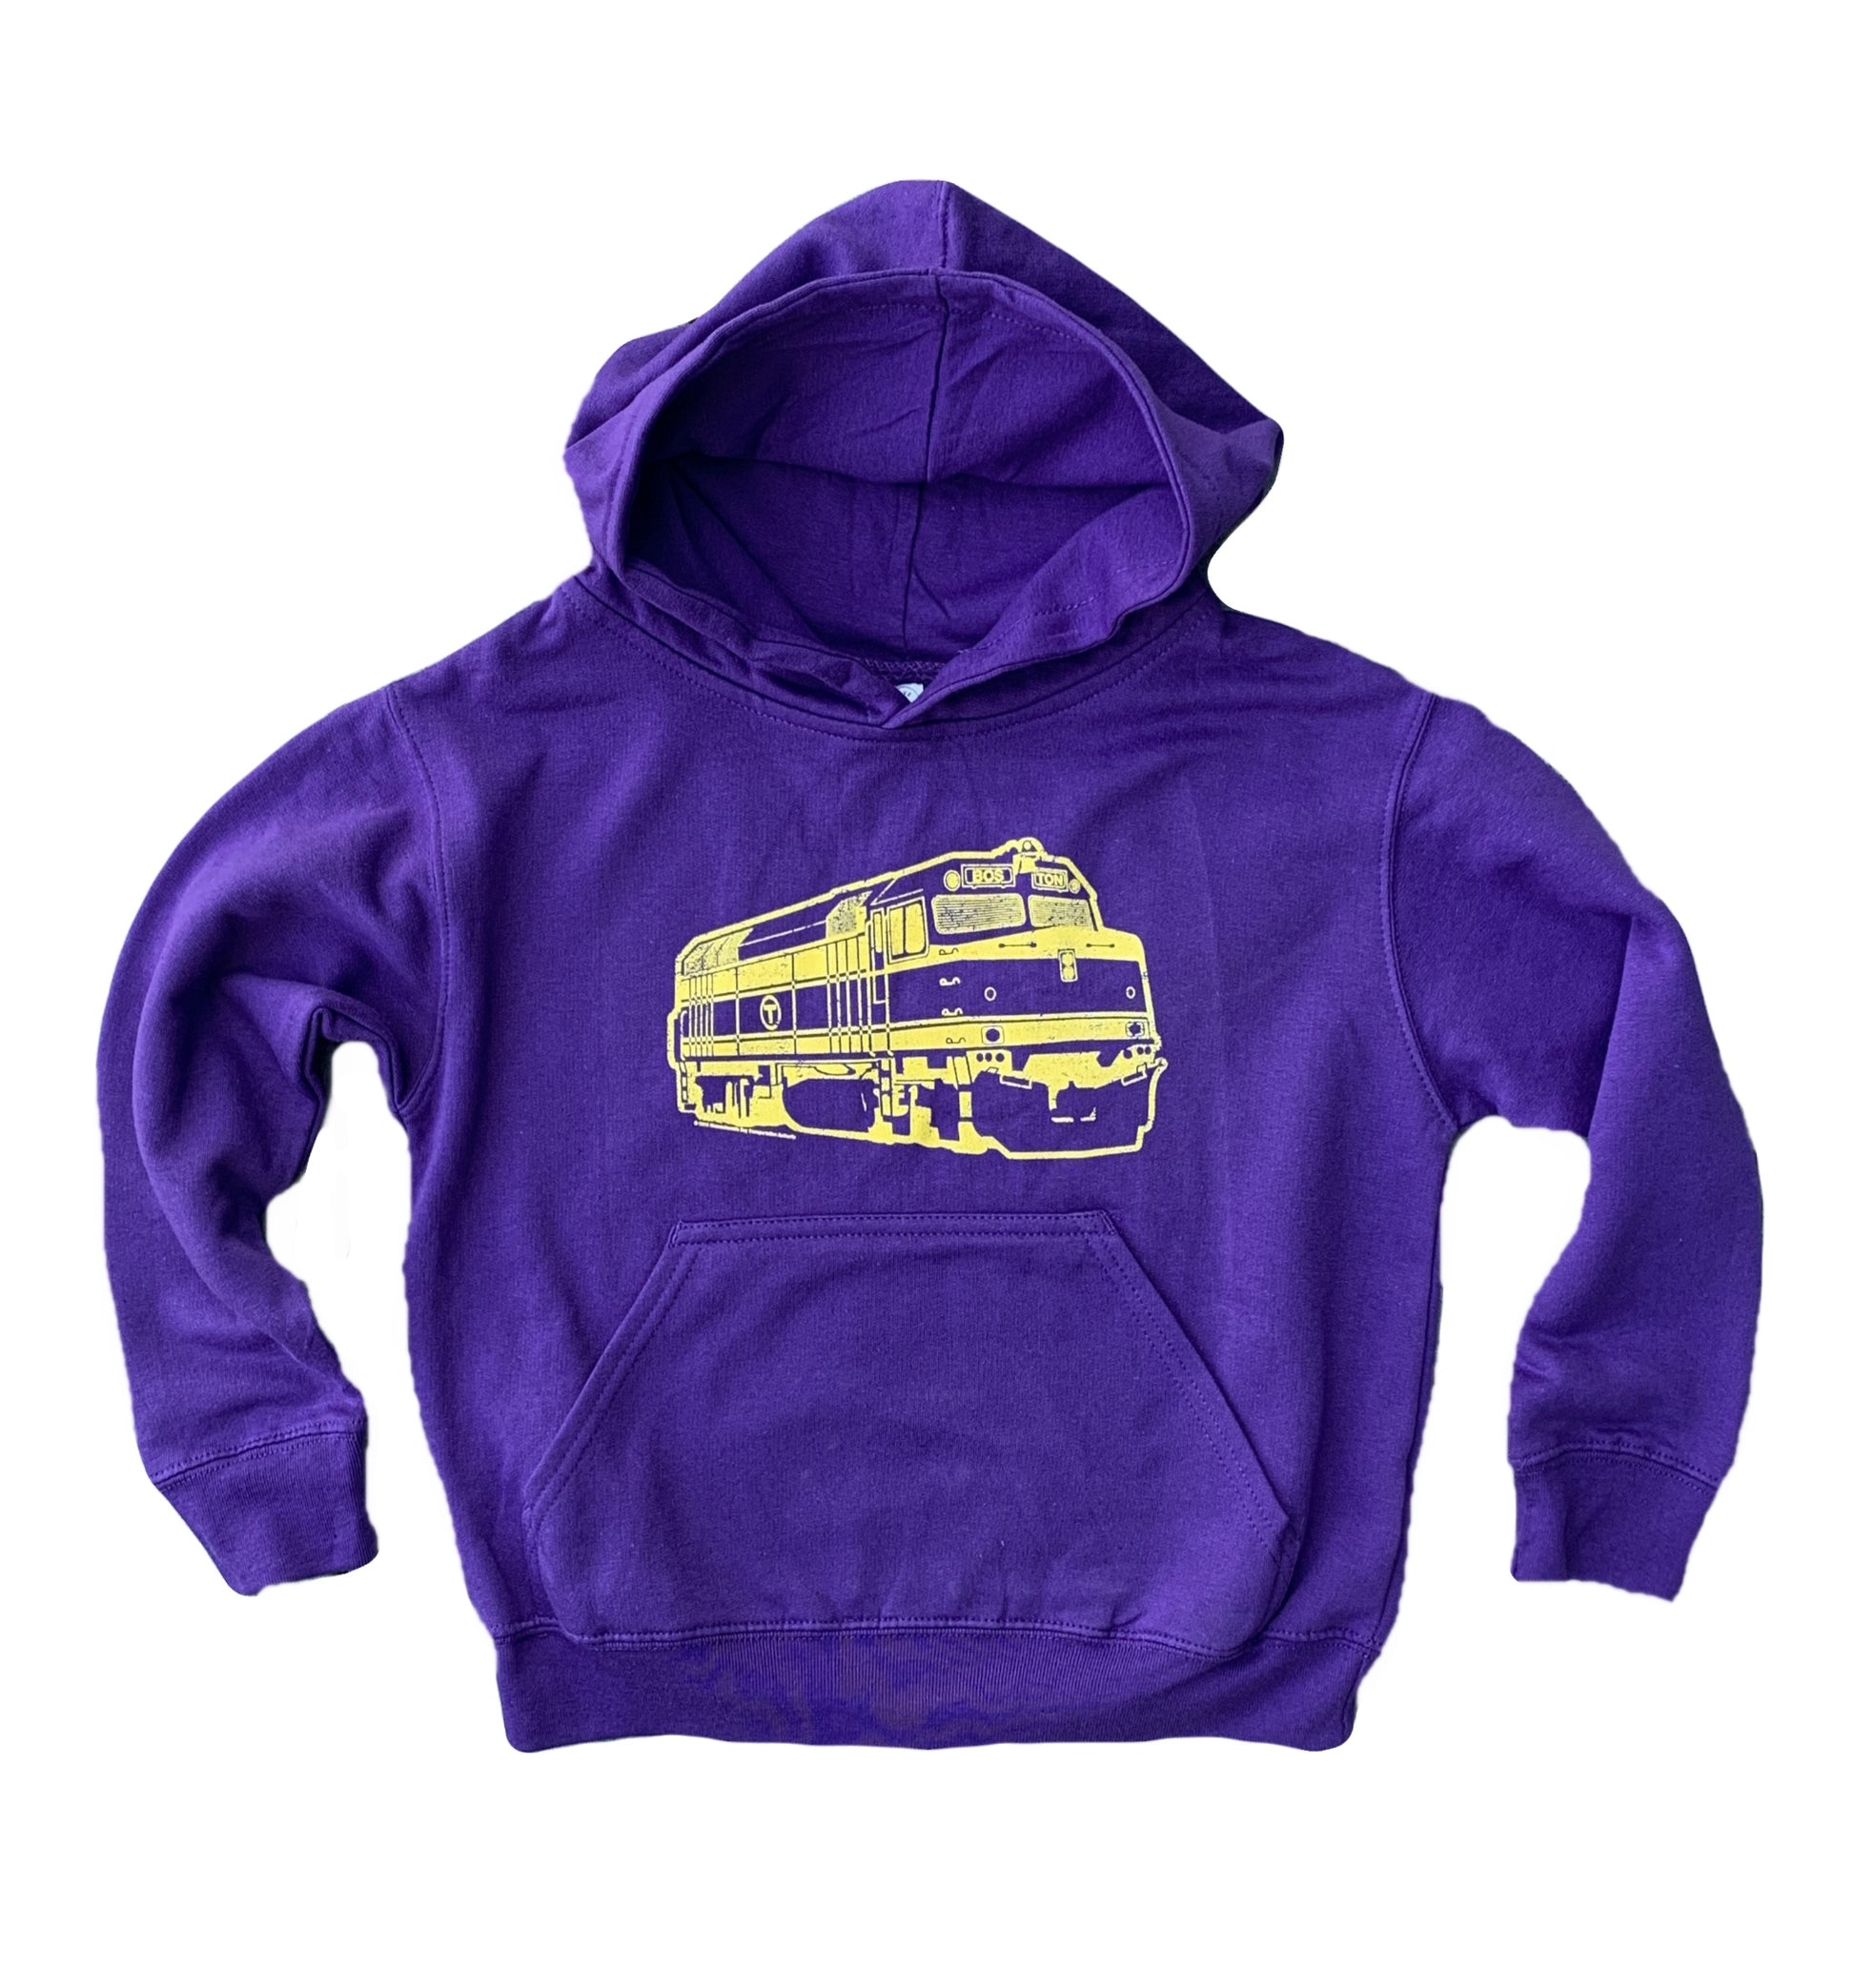 Purple Hoodie with a Yellow MBTA Commuter Rail Locomotive